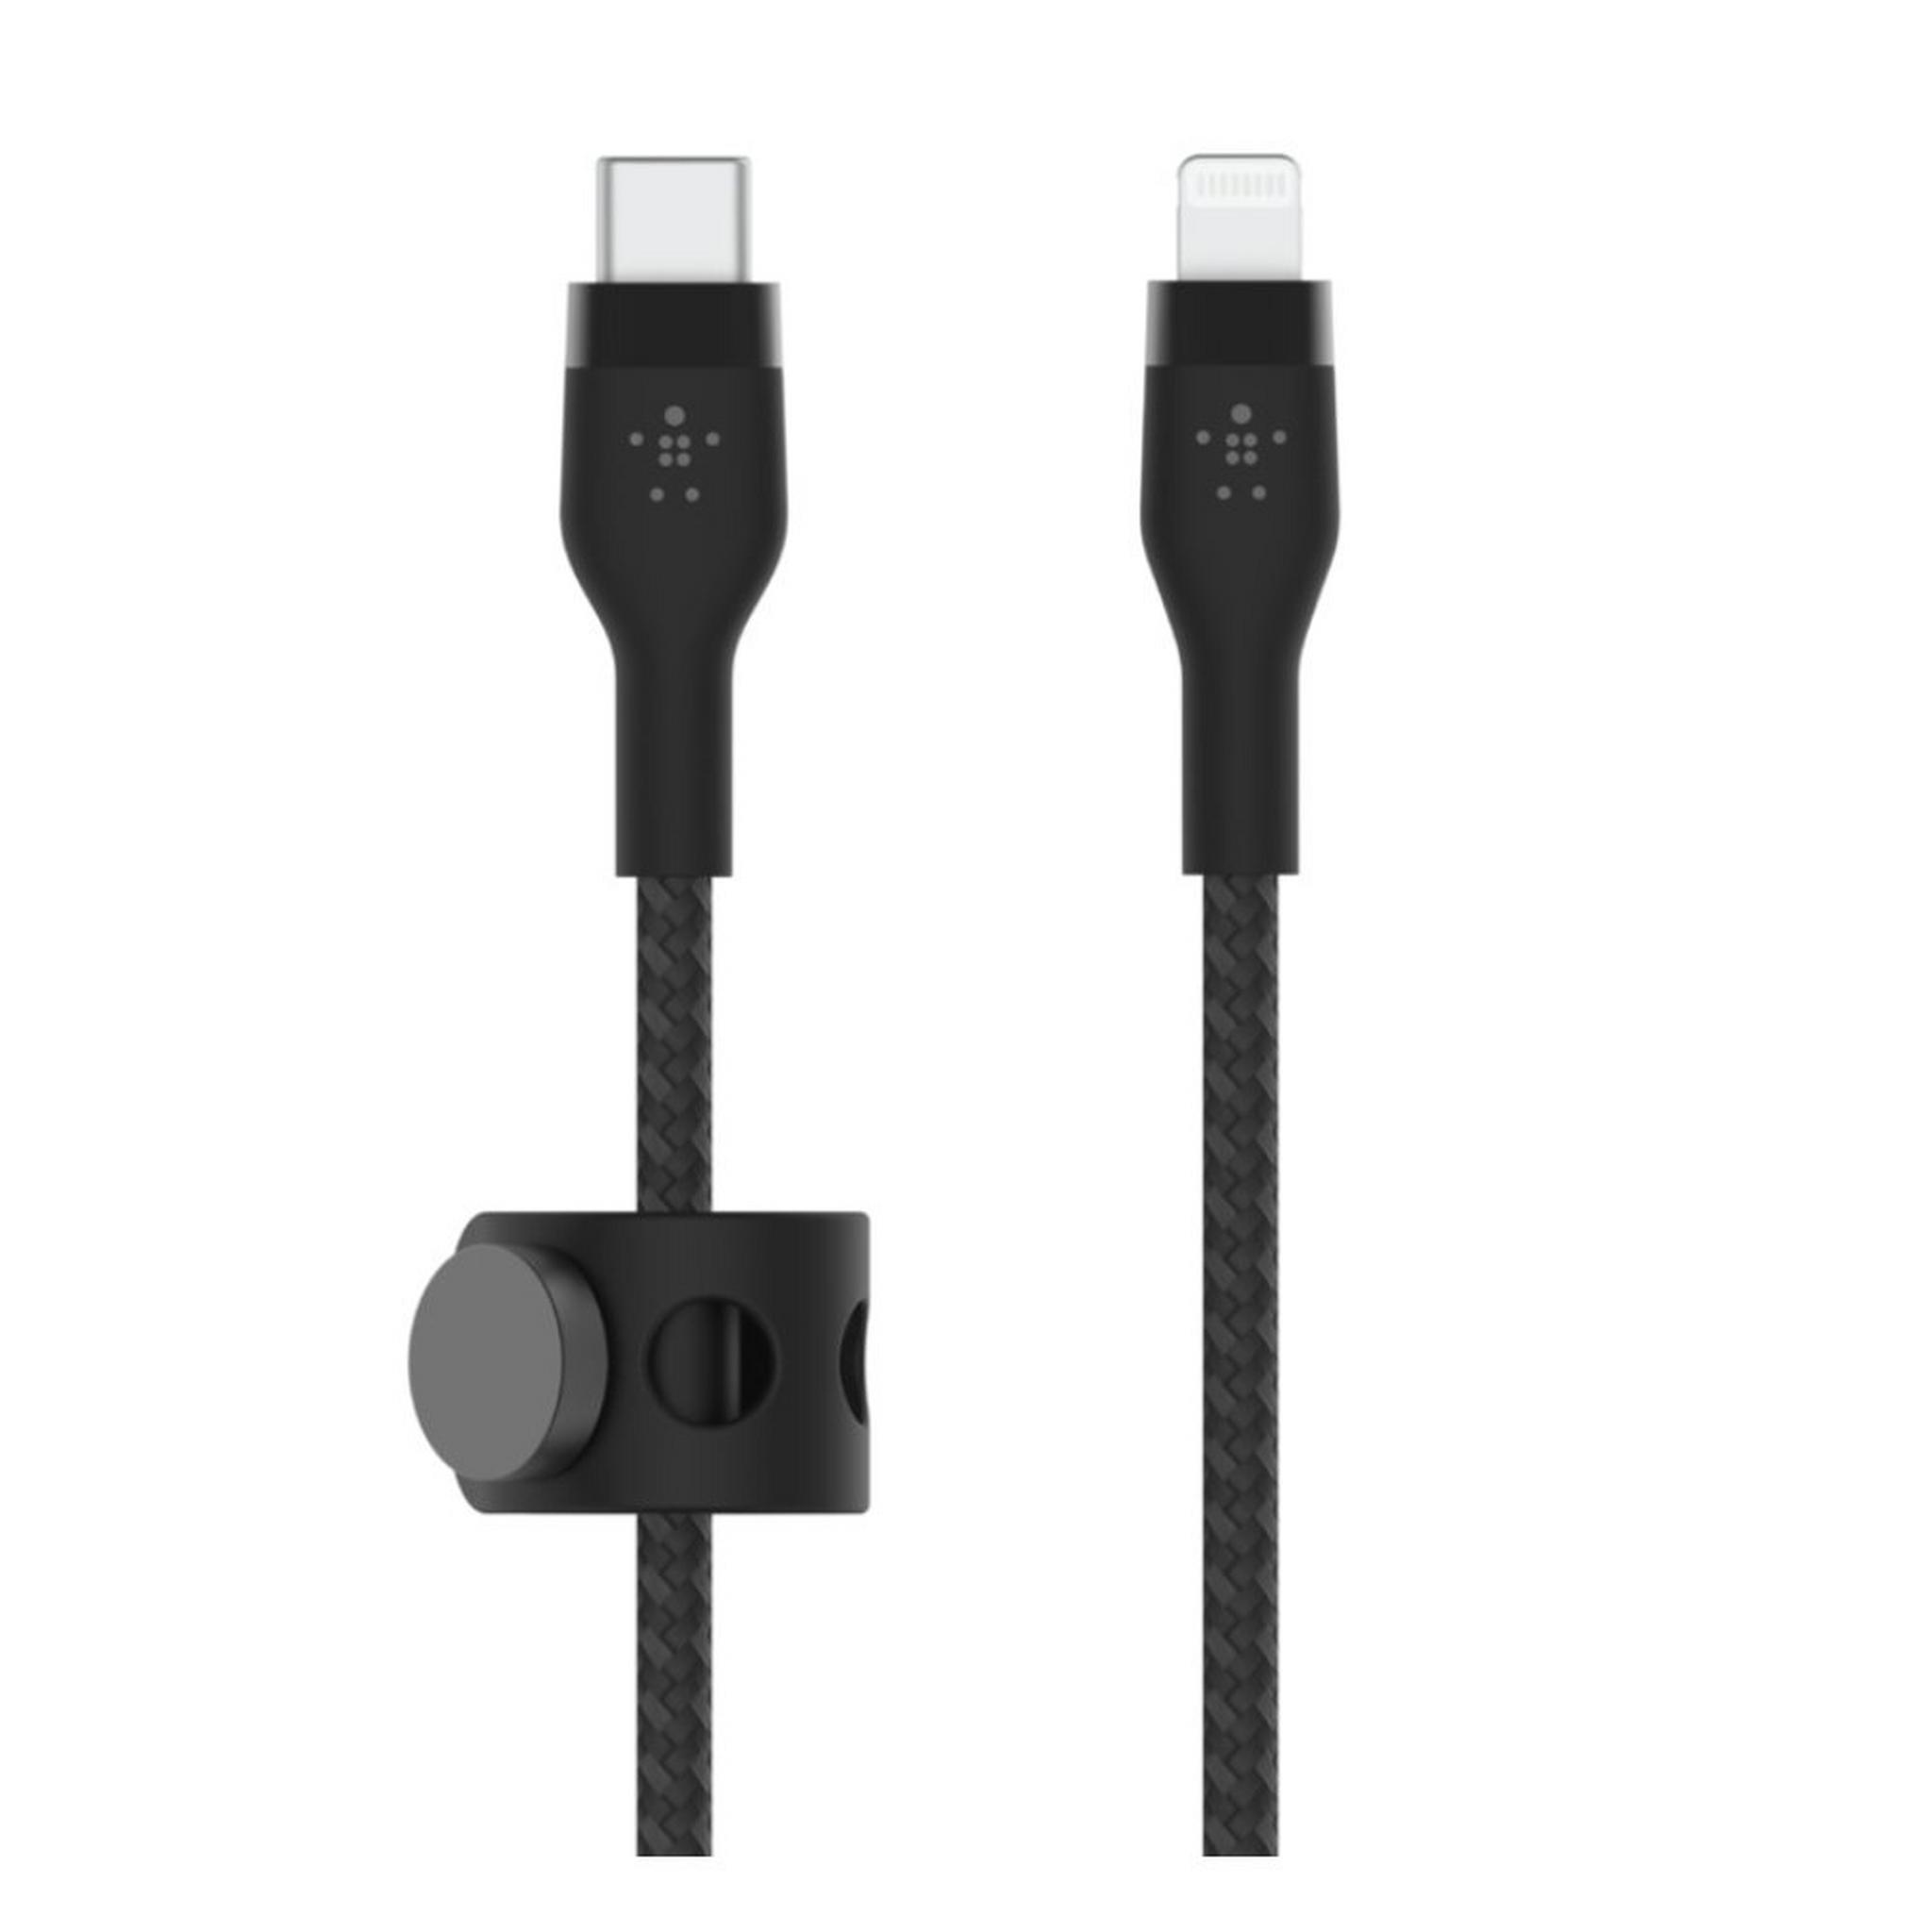 Belkin USB-C to Lightning Cable 1M - Black